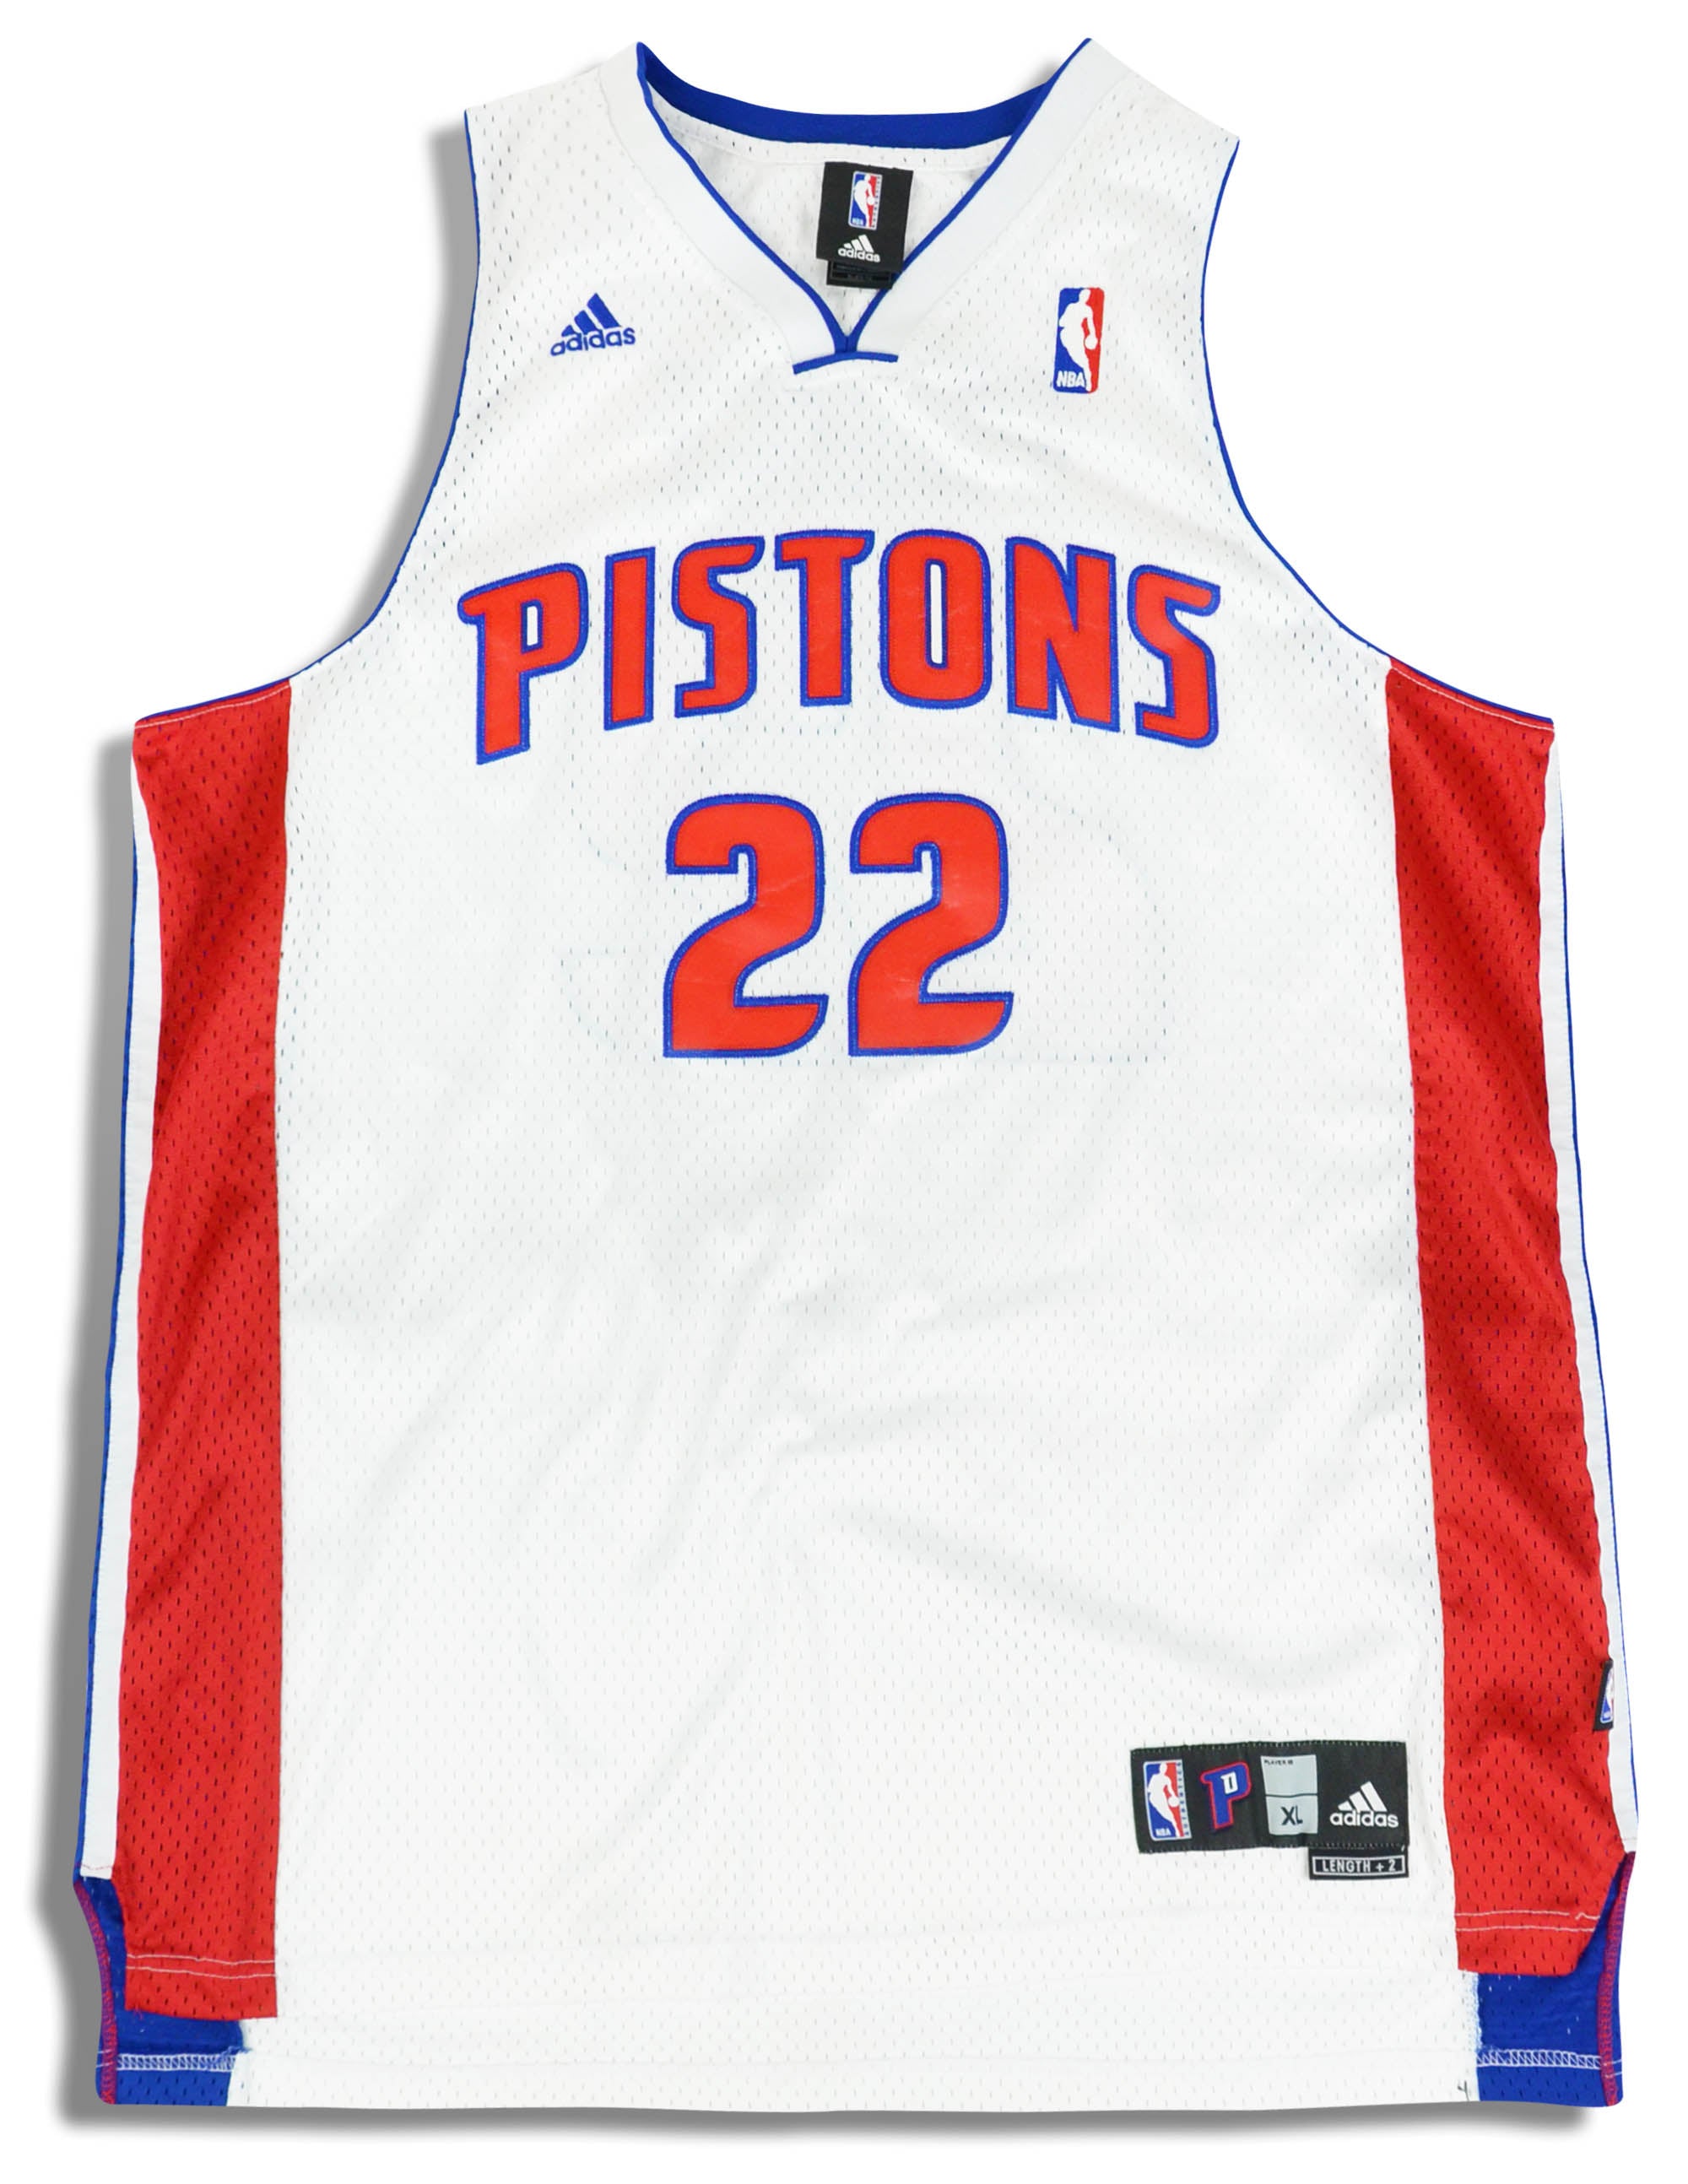 2009-10 Detroit Pistons Tayshaun Prince #22 Game Used Blue Warm Up Top Shirt  1